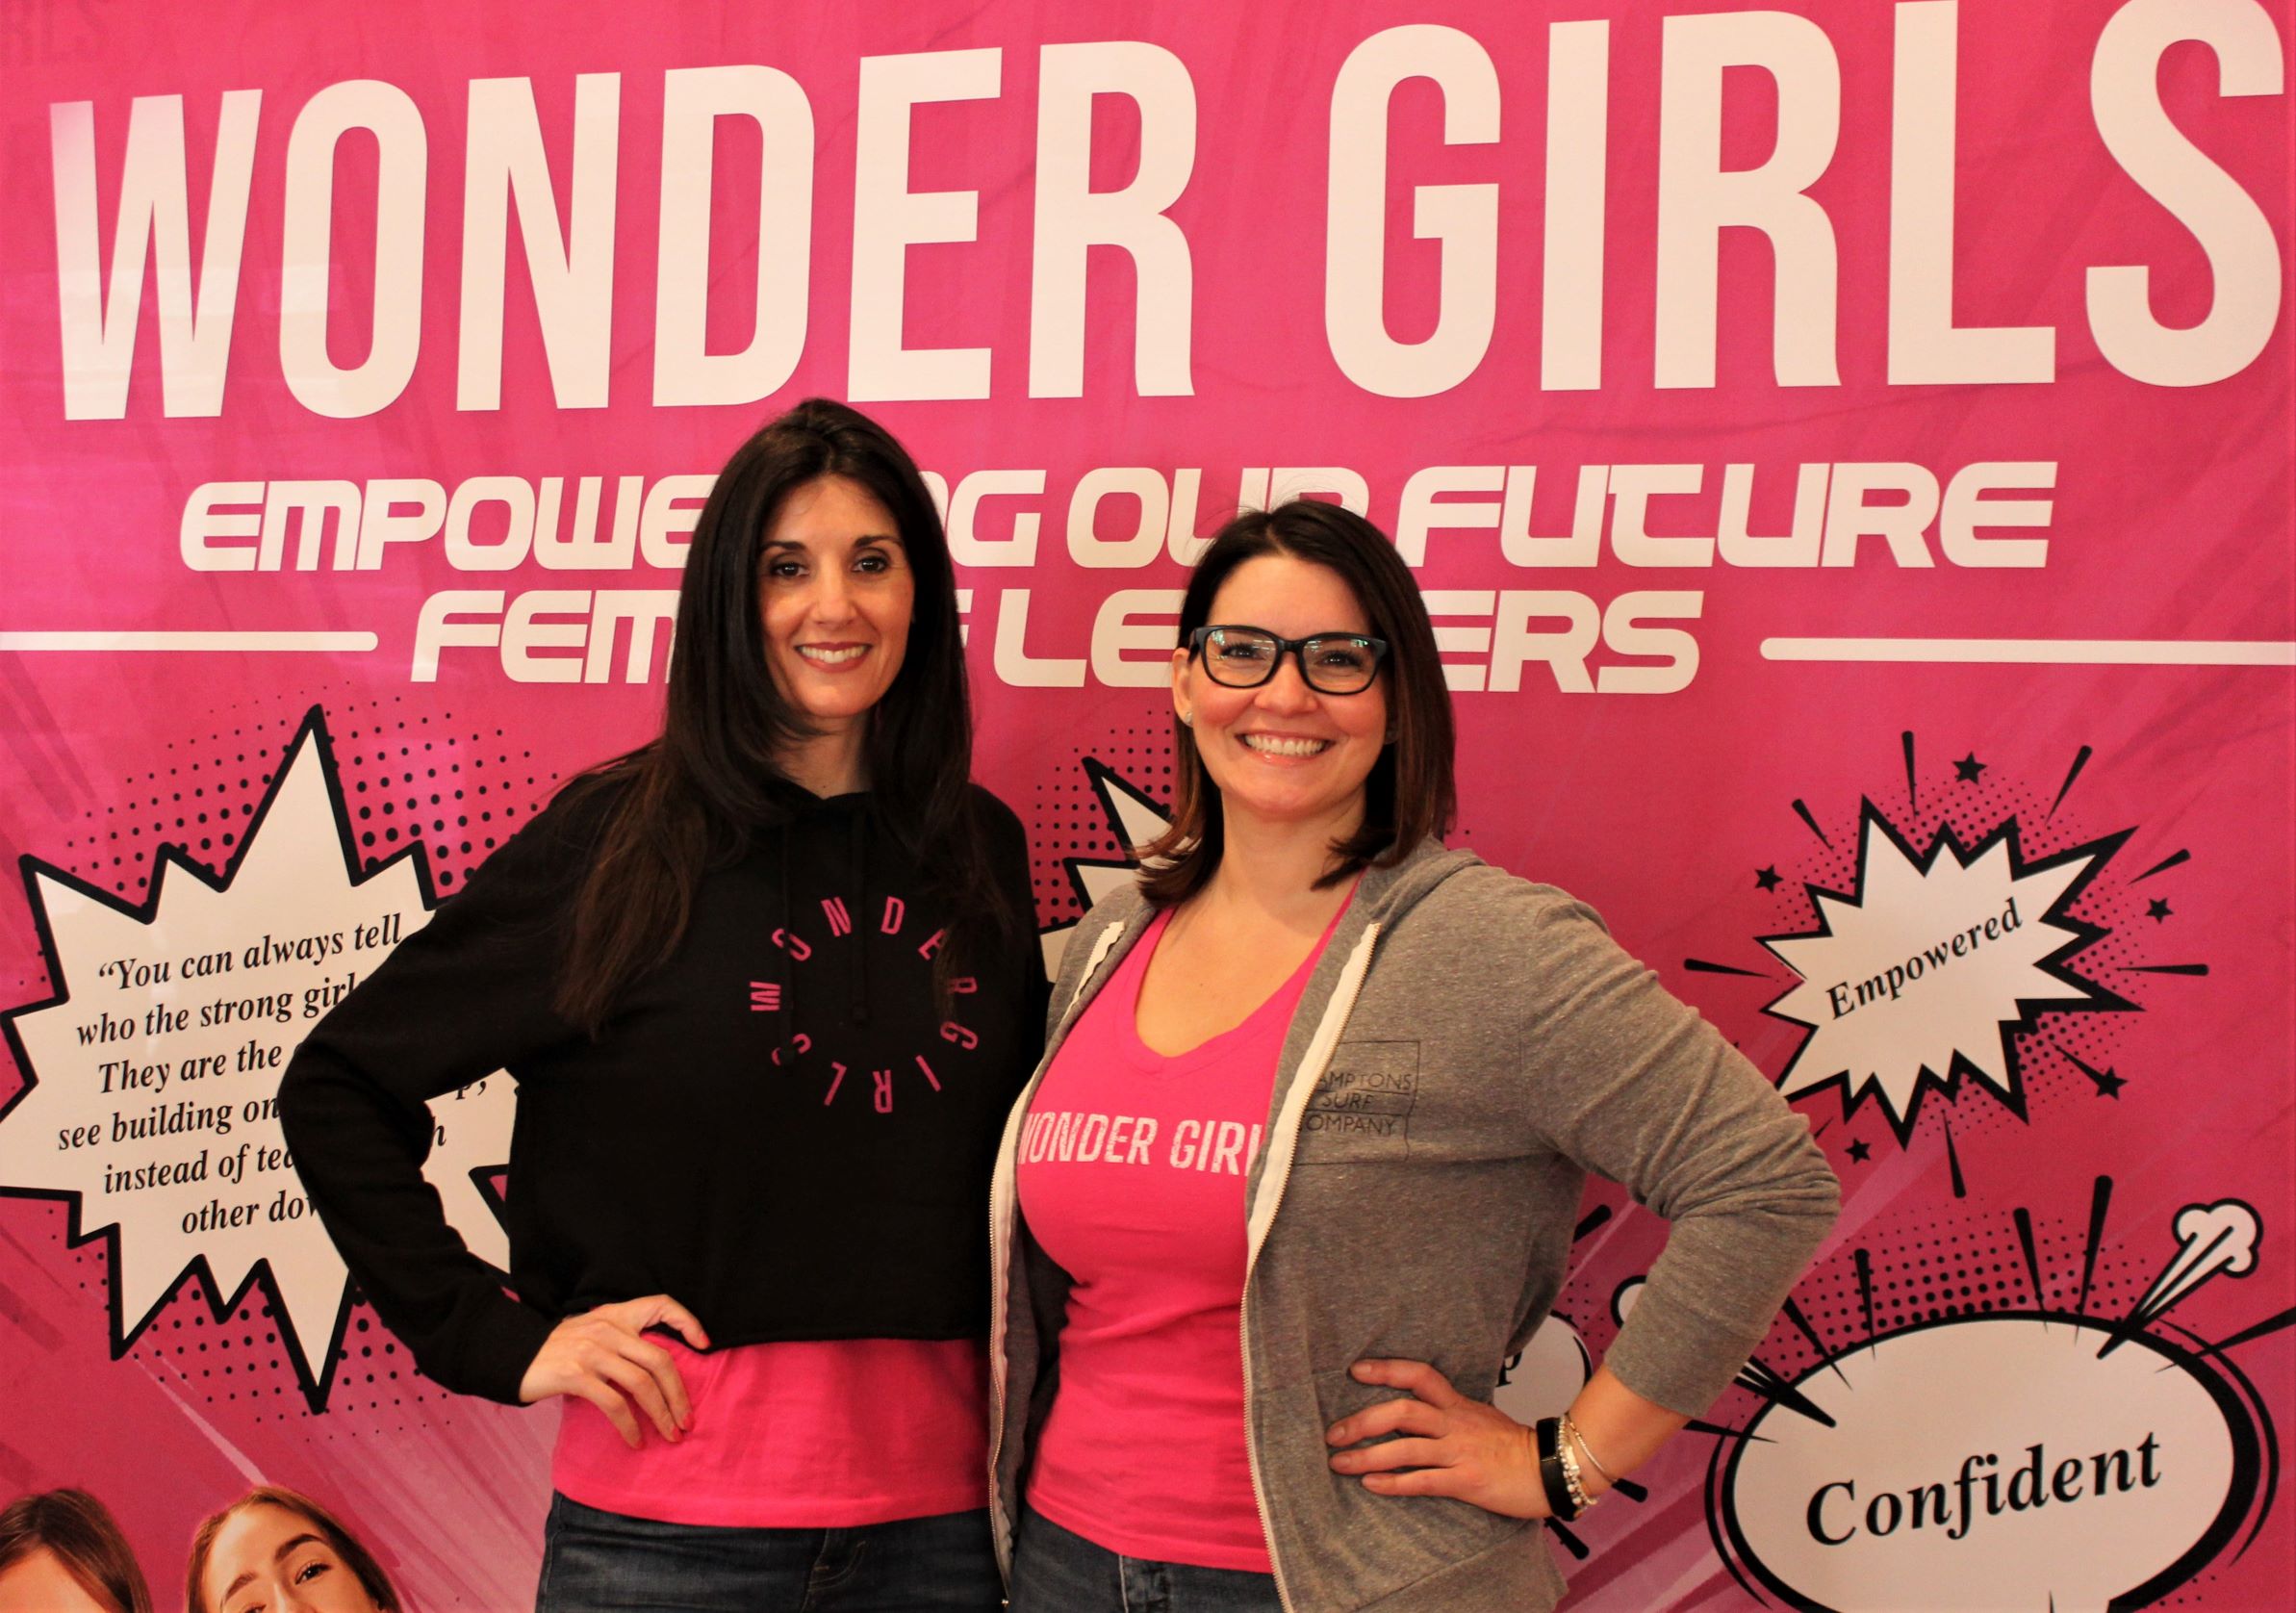 Photo: Wonder Girls USA founders Natalie Maniscalco and Irene Zervoudis  (photo: Kathy Kahn) 